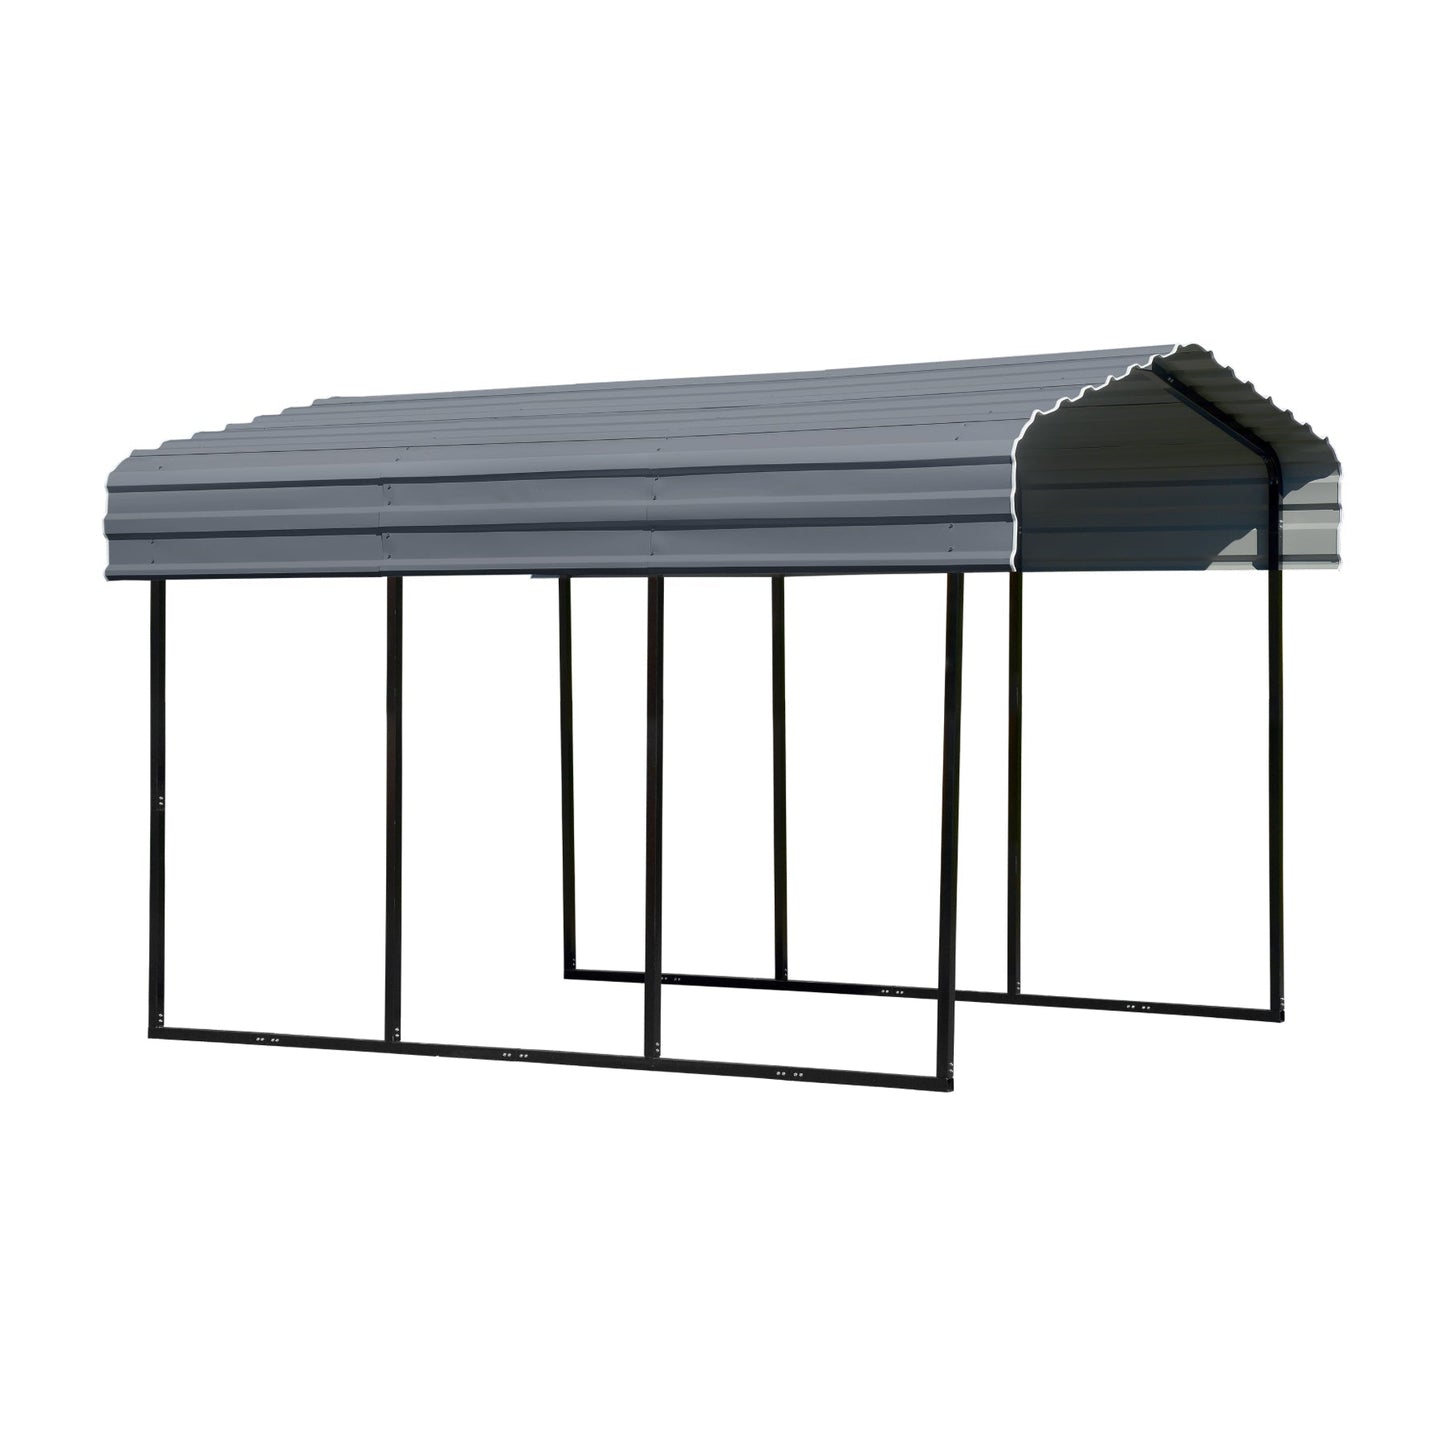 Arrow Steel Carport Canopy 10 x 15 x 9 ft.-Delightful Yard